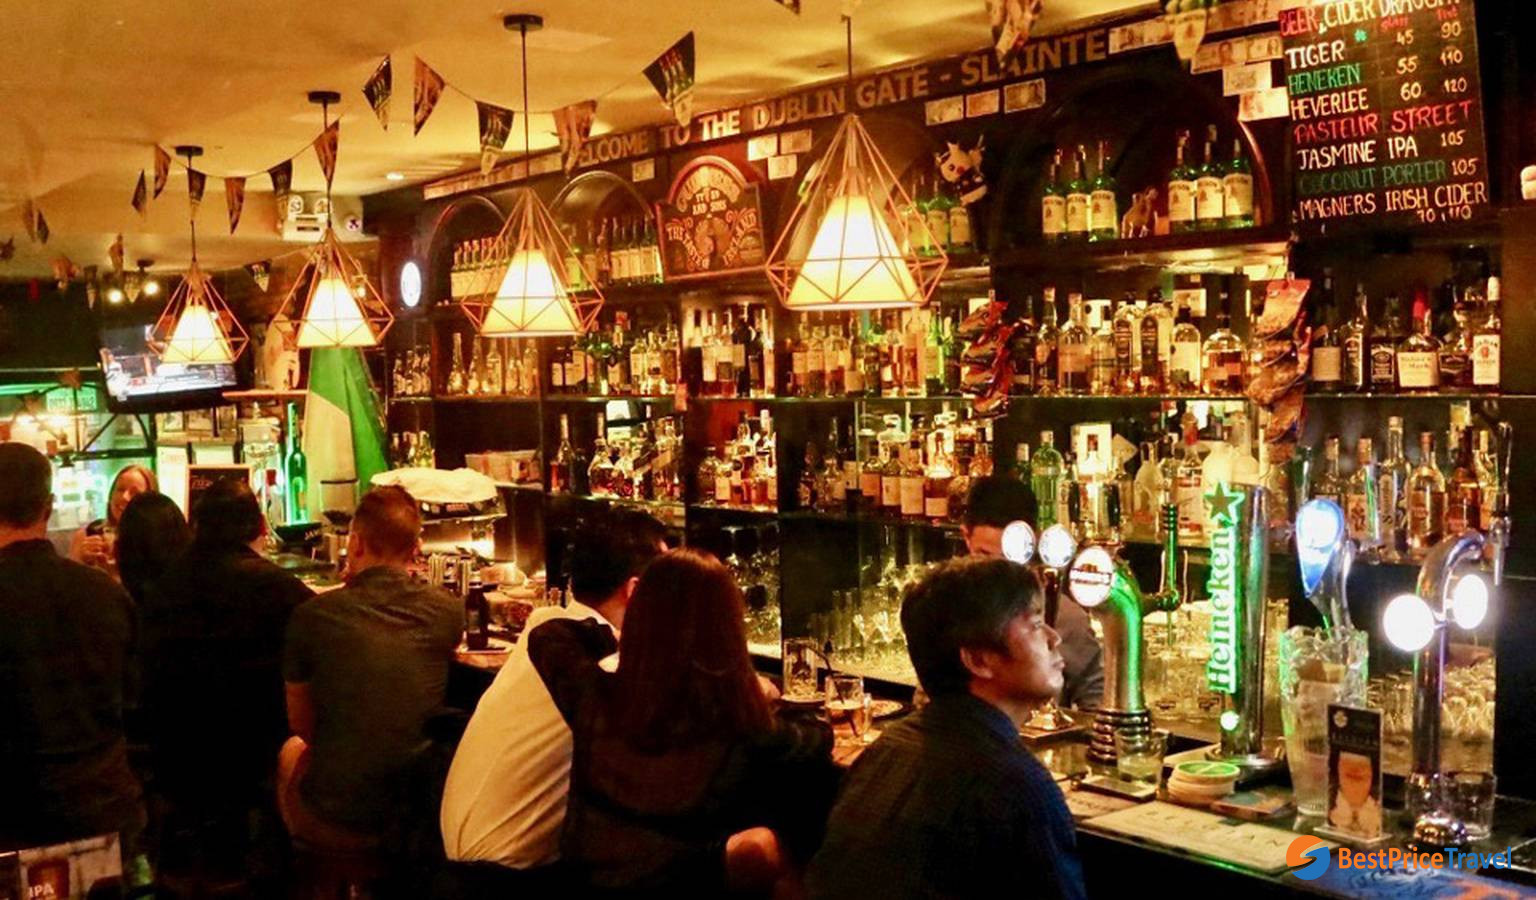 Dublin Gate Irish Pub in ho chi minh city